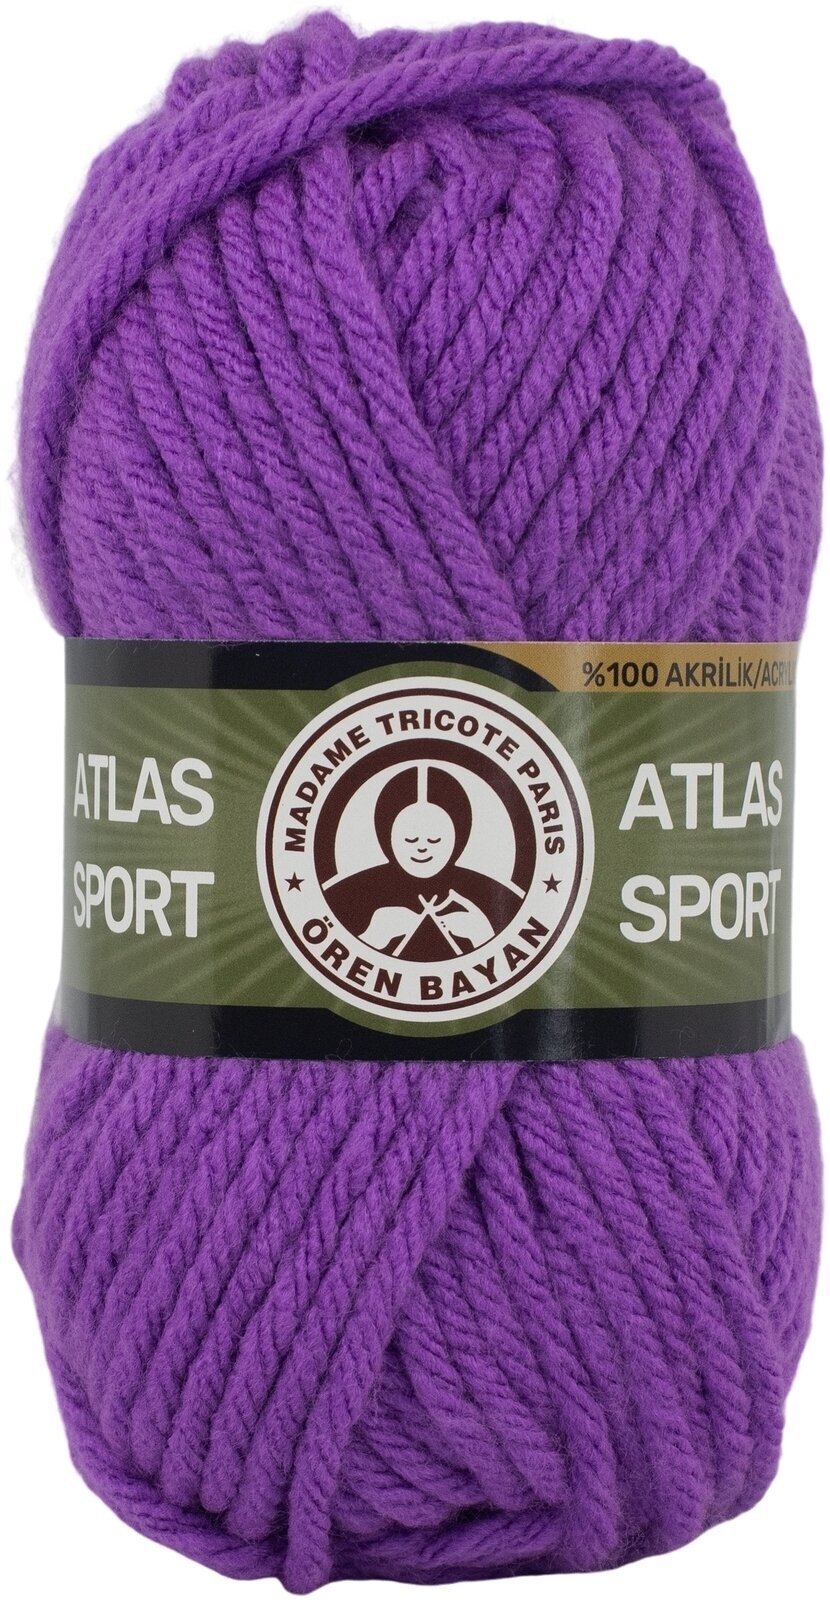 Knitting Yarn Madame Tricote Paris Atlas Sport 3024 059 Knitting Yarn